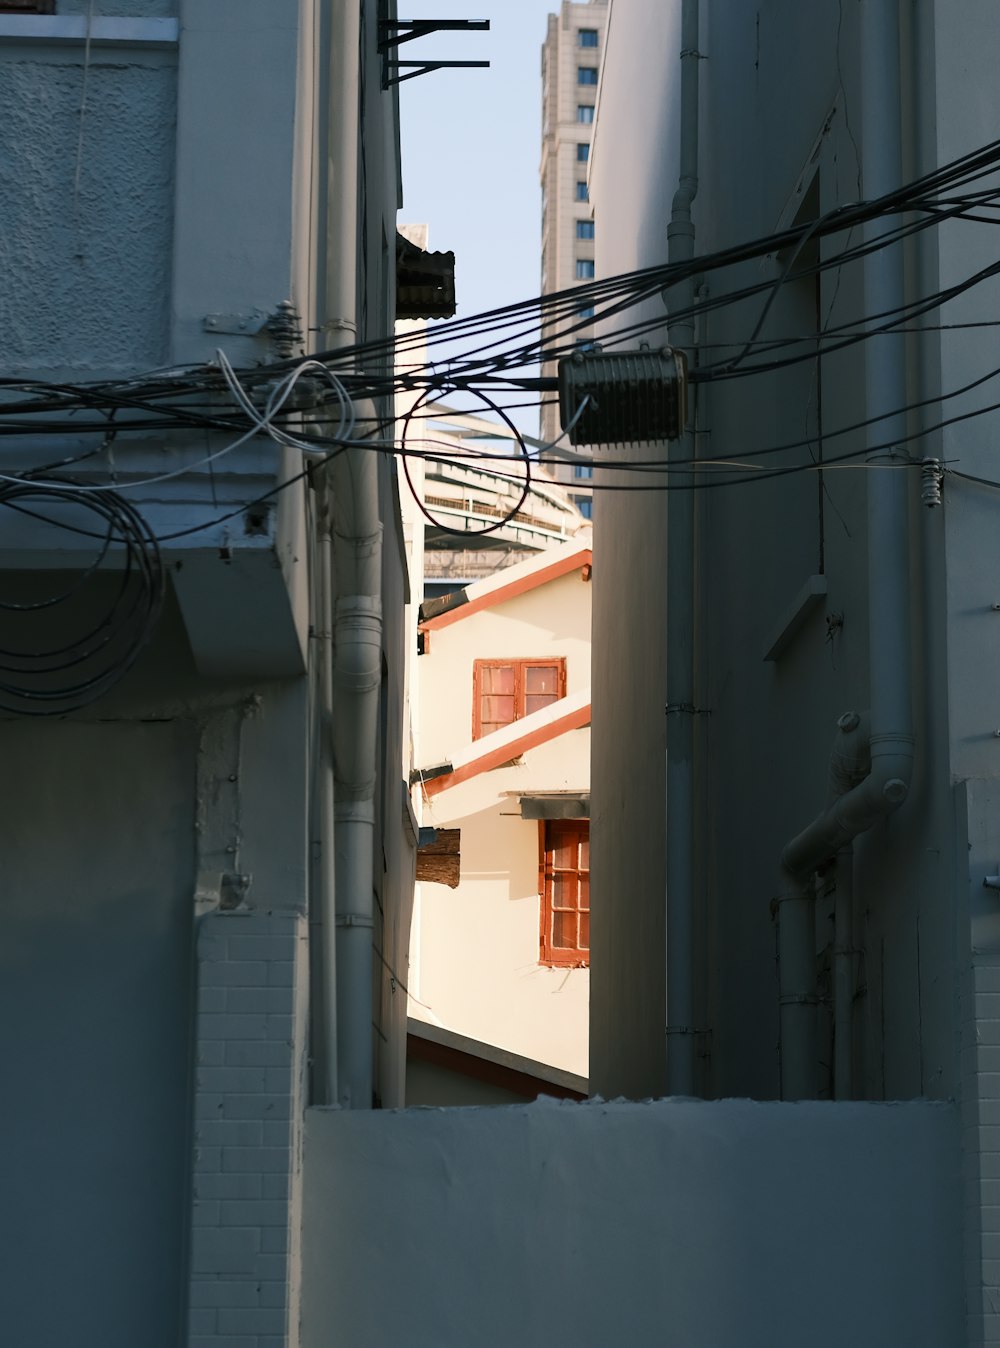 a view of a building through a narrow alley way